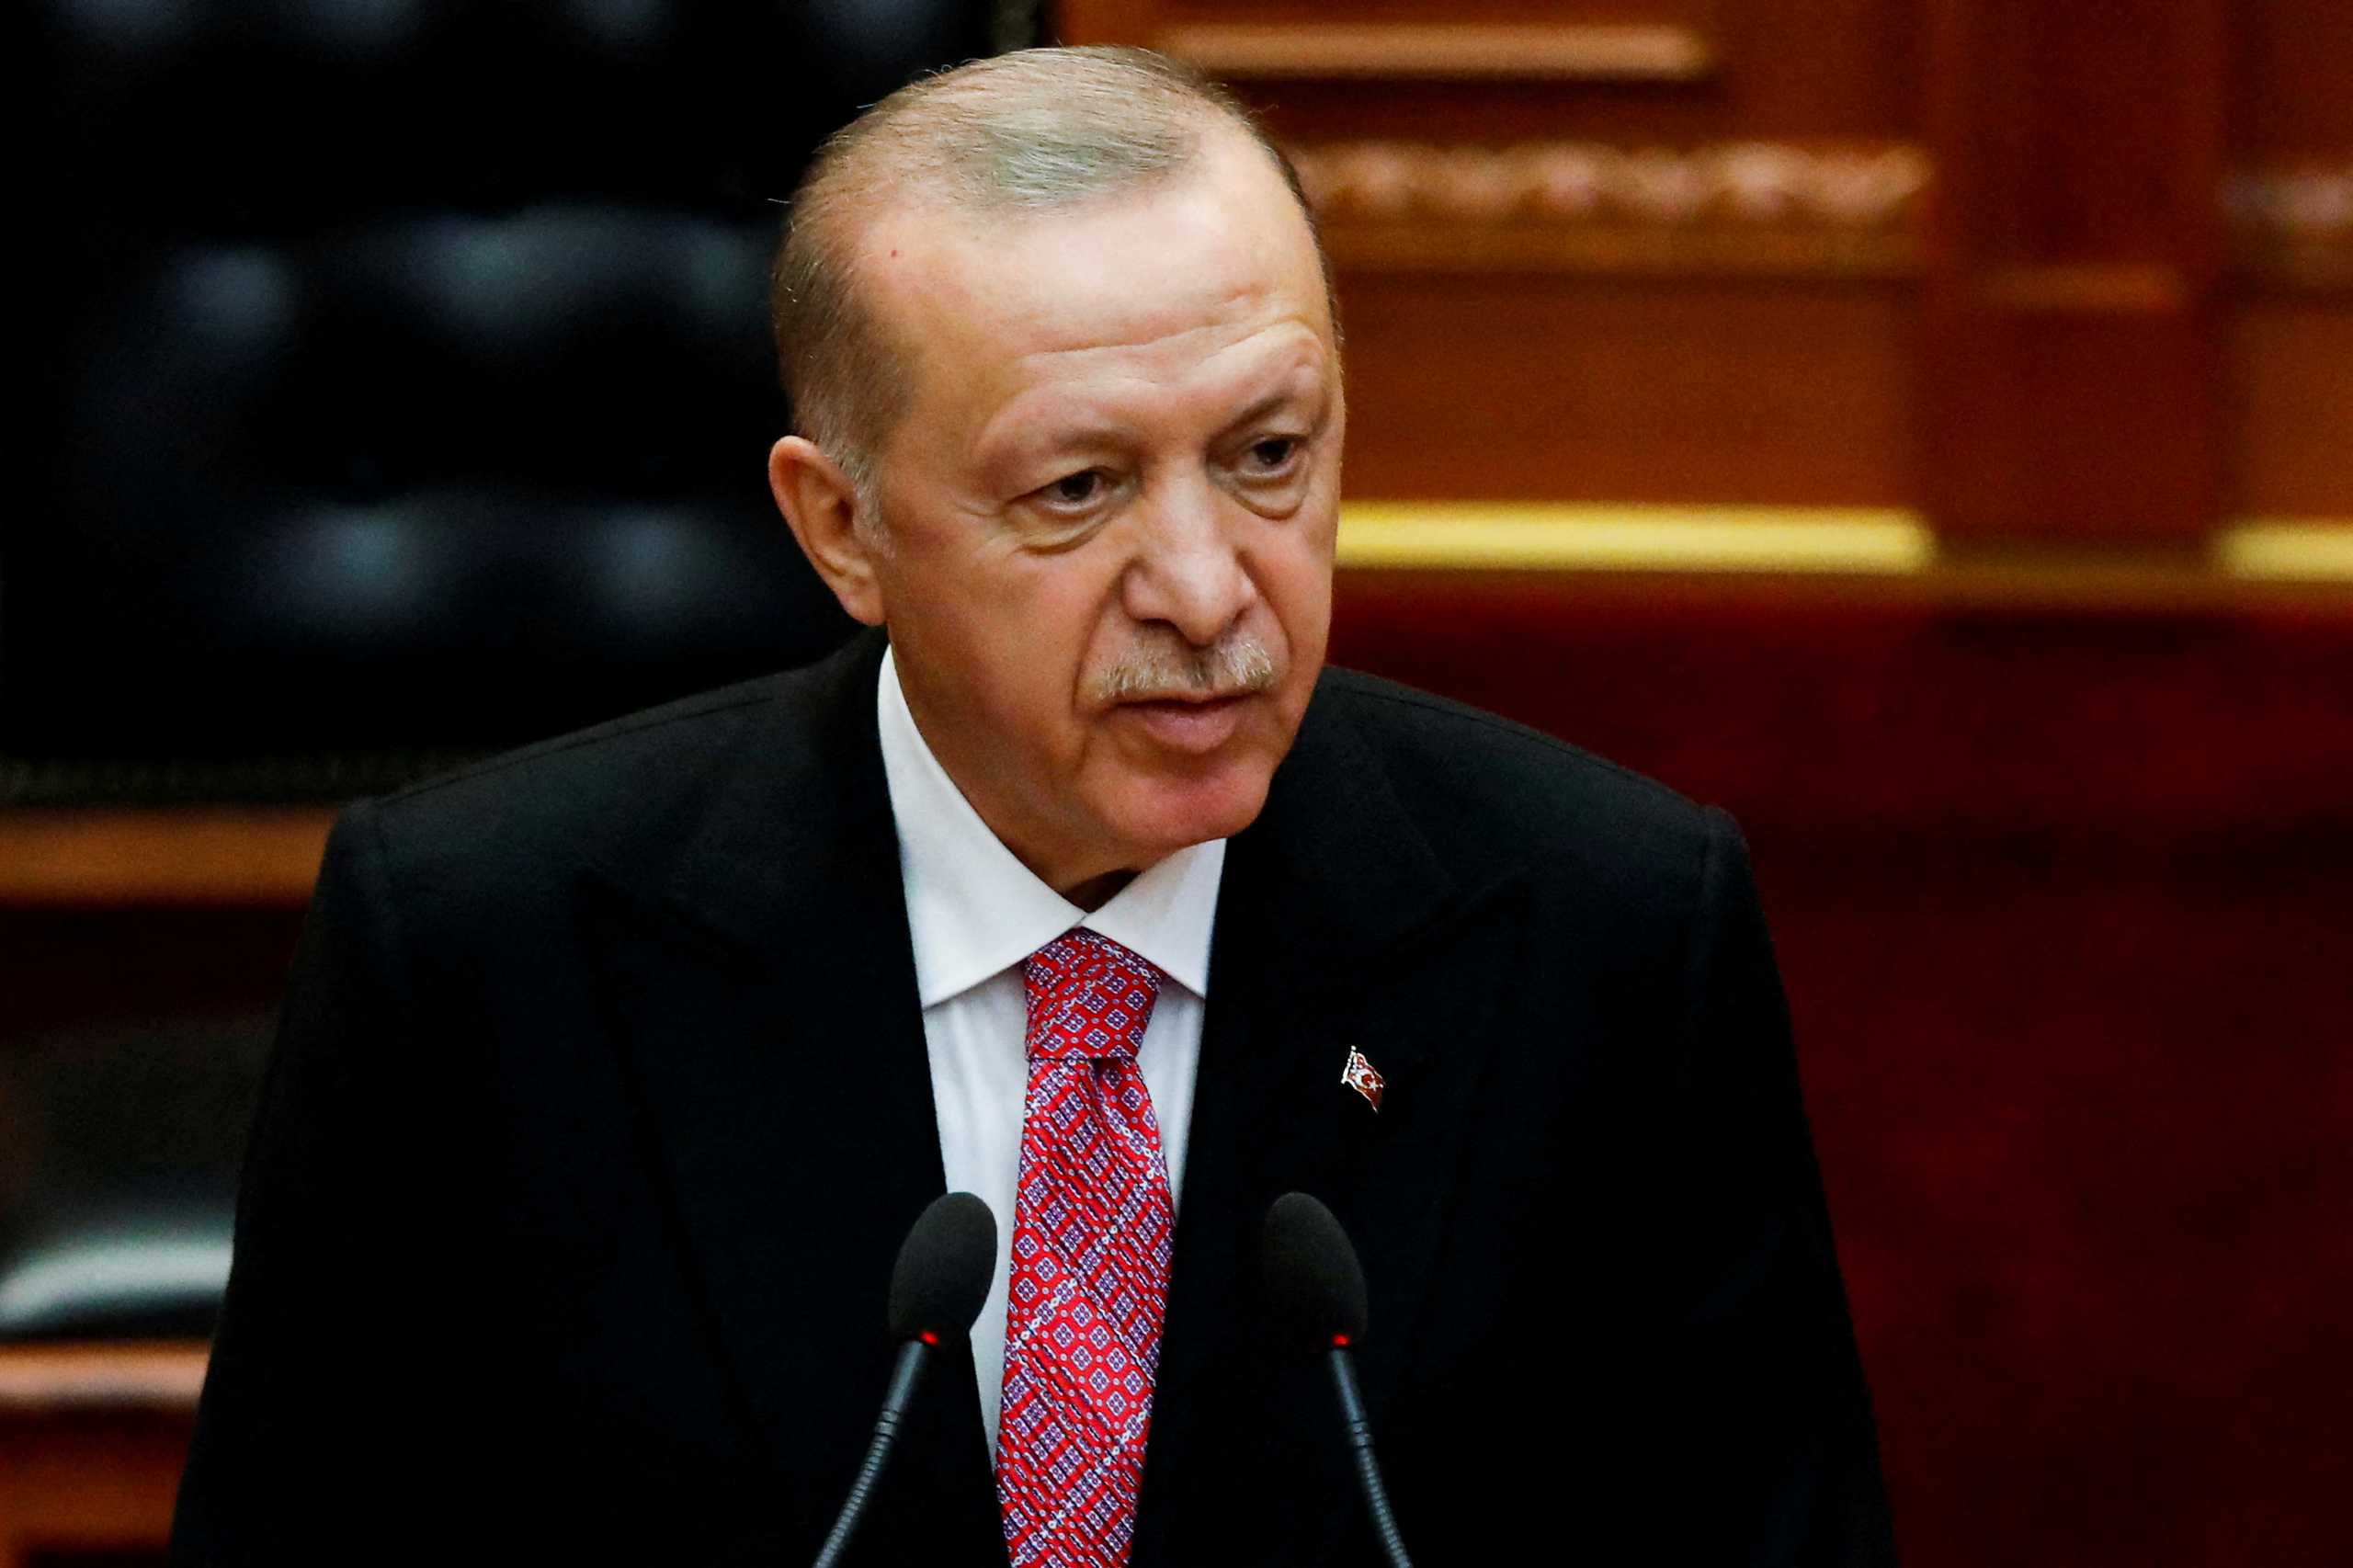 O Ερντογάν κάνει μήνυση στον Κιλιτσντάρογλου για τη δήλωση ότι σχεδιάζει να φύγει απ’ τη χώρα